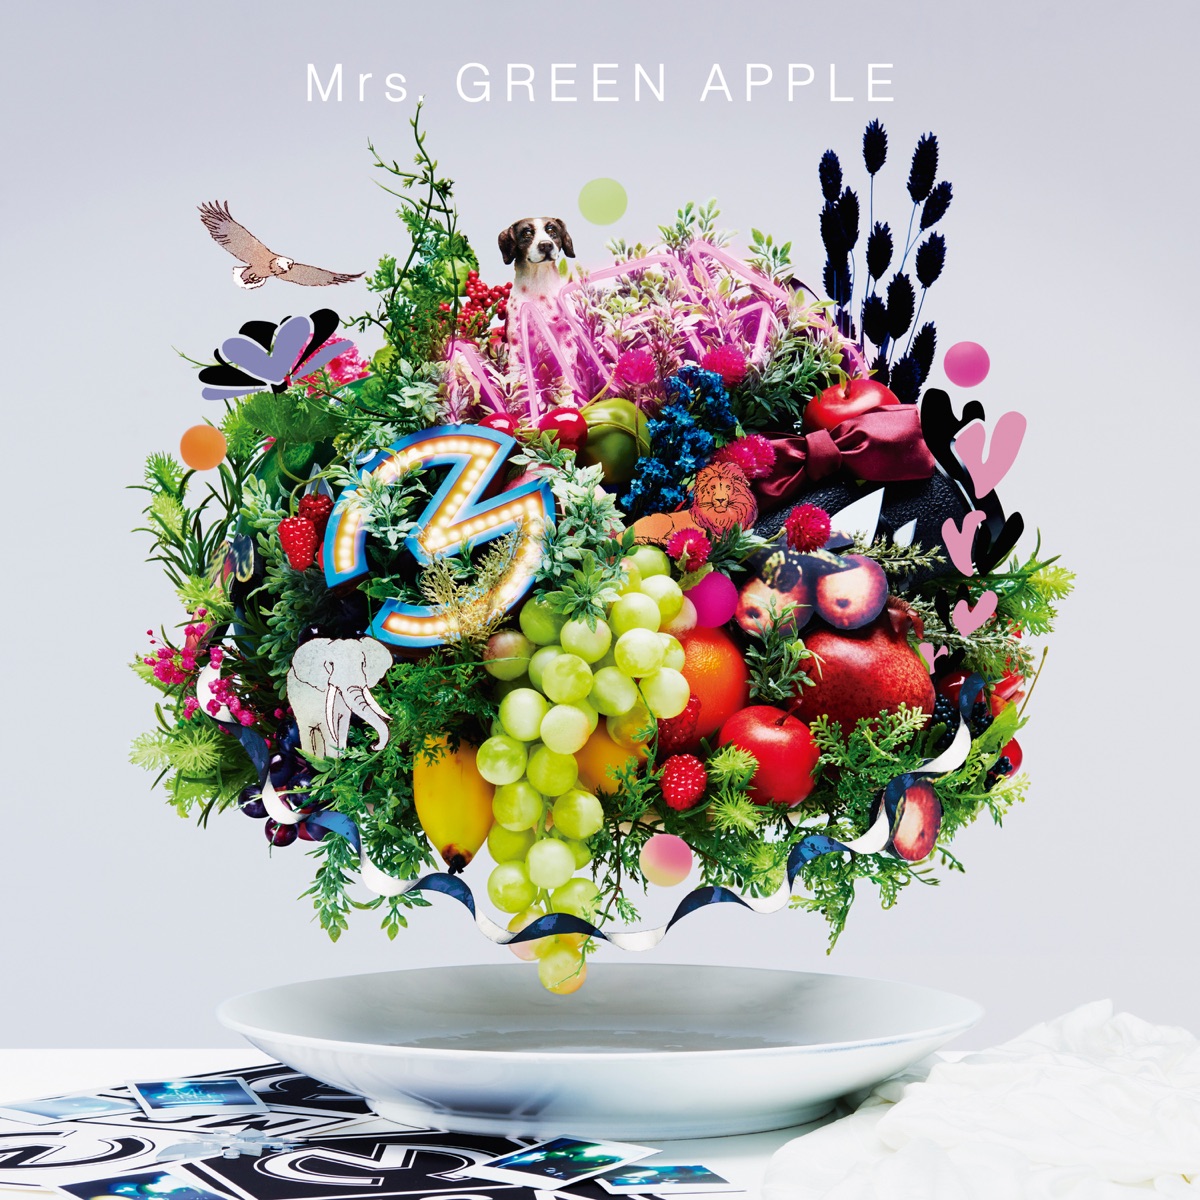 『Mrs. GREEN APPLE - Log (feat. 坂口有望)』収録の『Love me, Love you』ジャケット